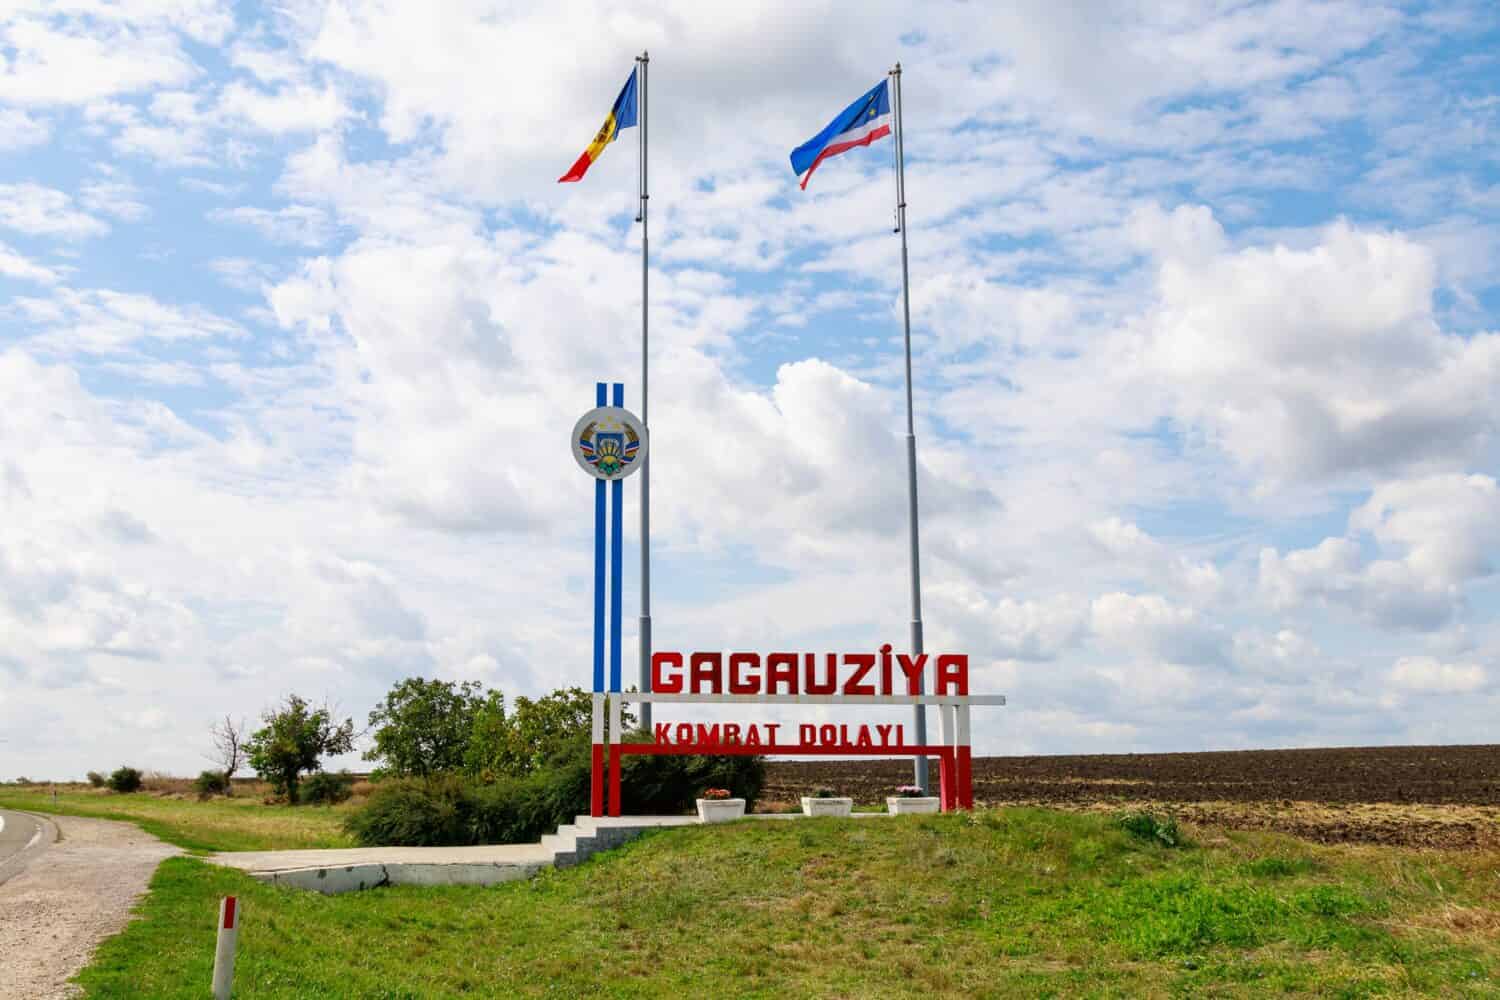 The inscription in the Gagauz language GAGAUZIA KOMRAT DISTRICT. Welcome to Gagauzia, Moldova. Flags of Moldova and Gagauzia. Background